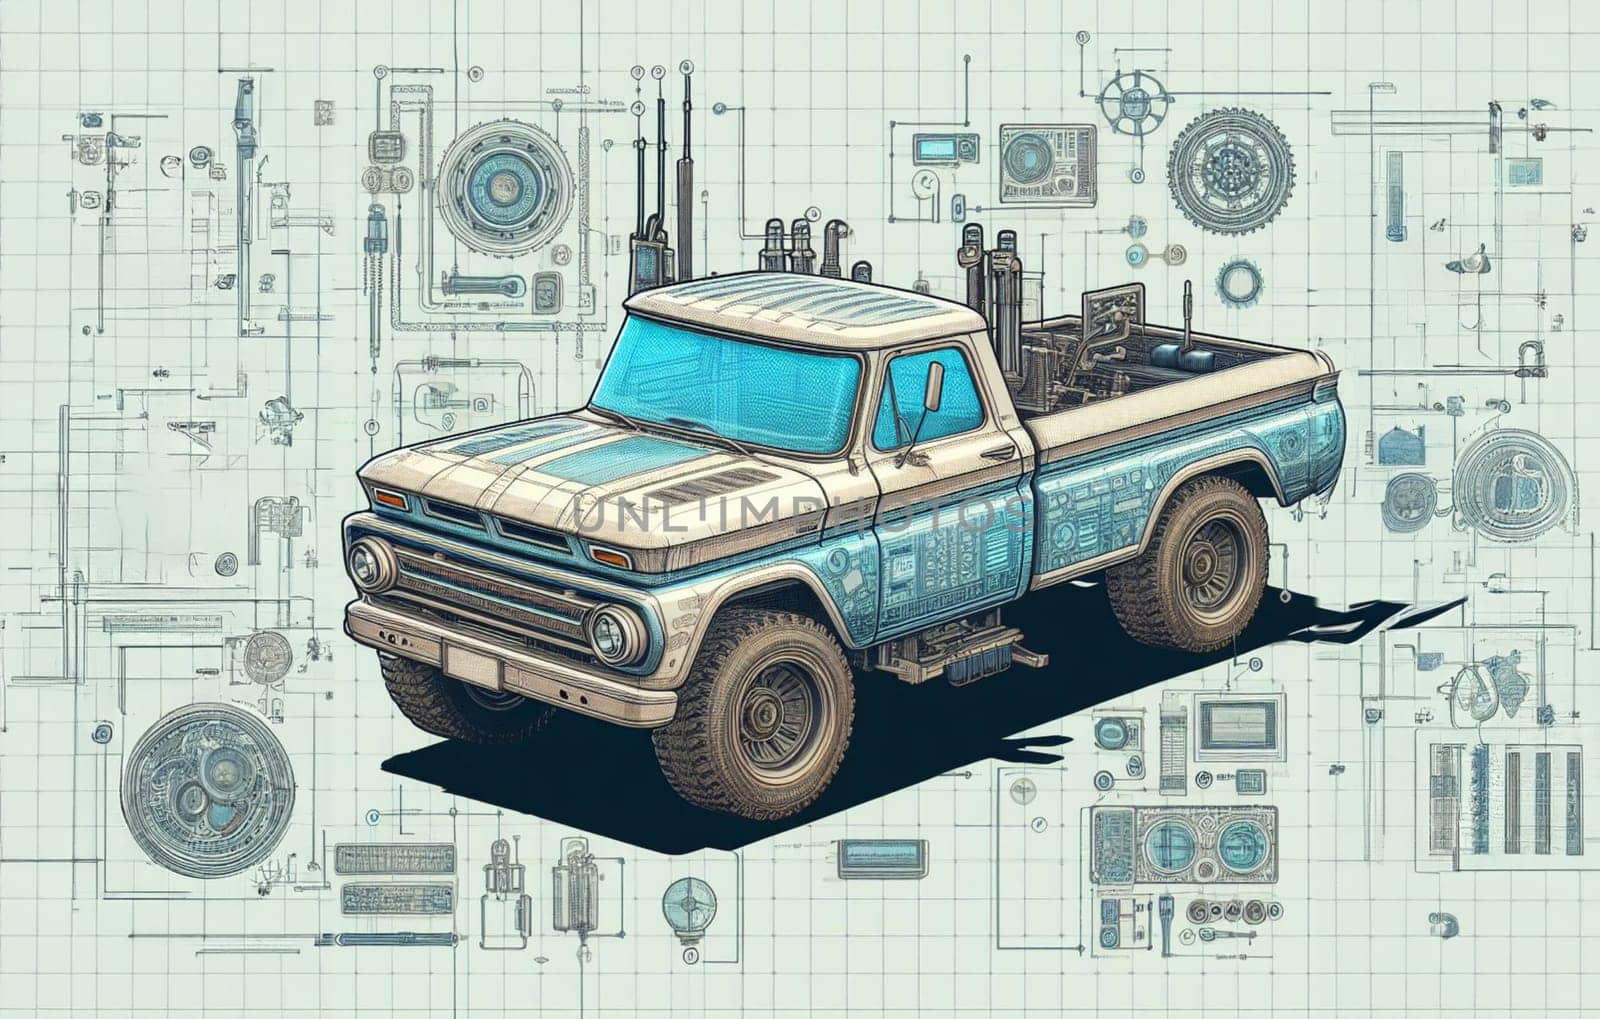 modern design render of truck pickup monster suv 4x4 powerful vehicle power schematics illustration by verbano